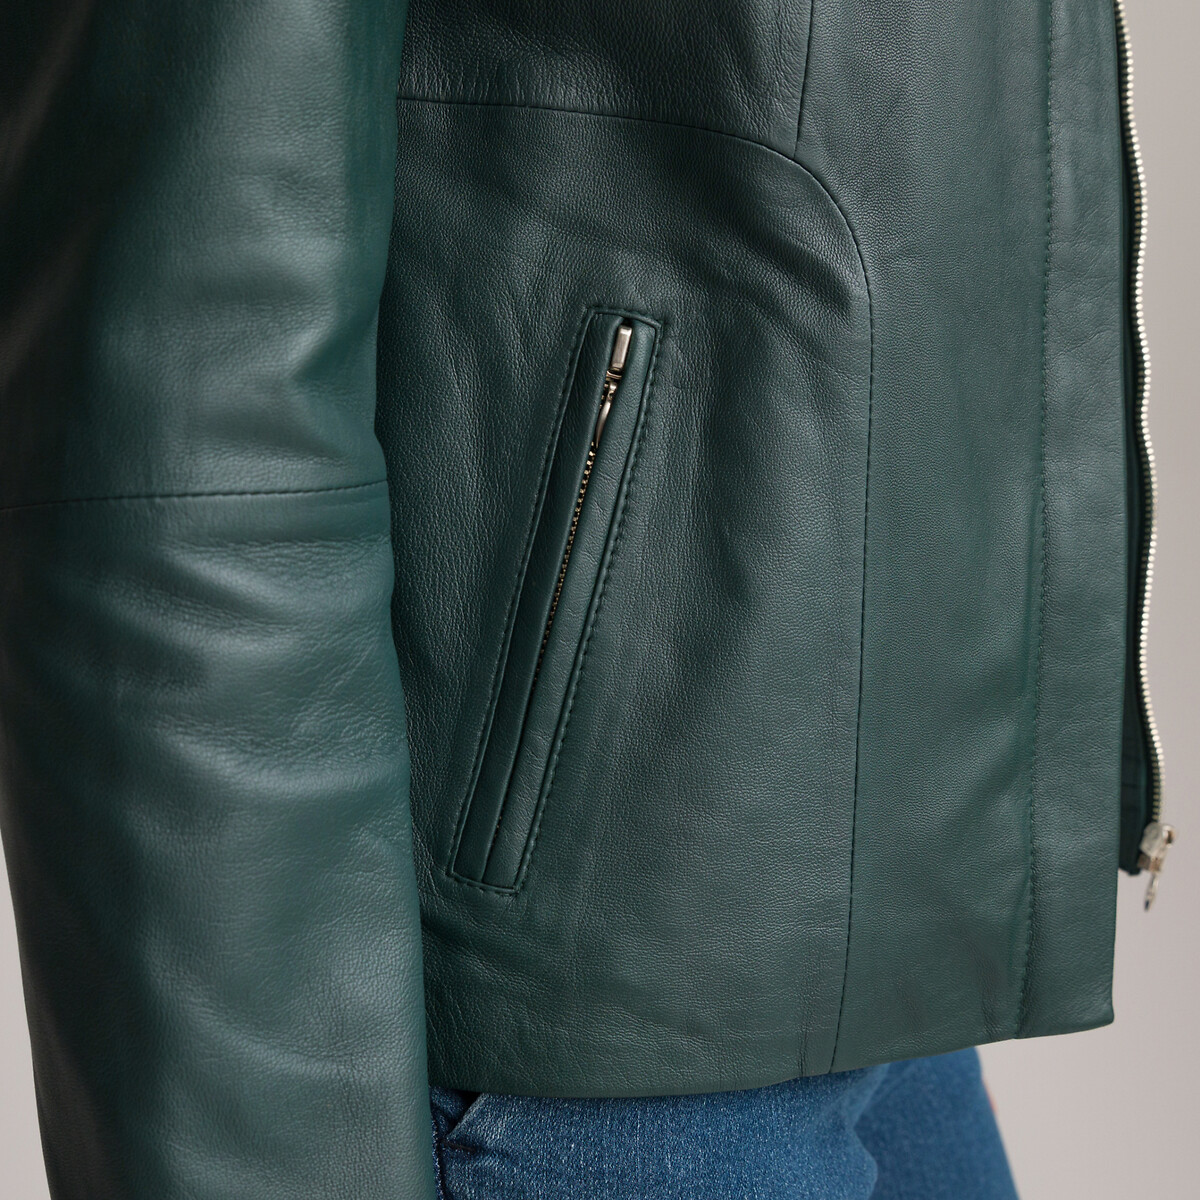 Куртка ANNE WEYBURN Куртка Короткая из кожи ягненка 46 (FR) - 52 (RUS) зеленый, размер 46 (FR) - 52 (RUS) Куртка Короткая из кожи ягненка 46 (FR) - 52 (RUS) зеленый - фото 2